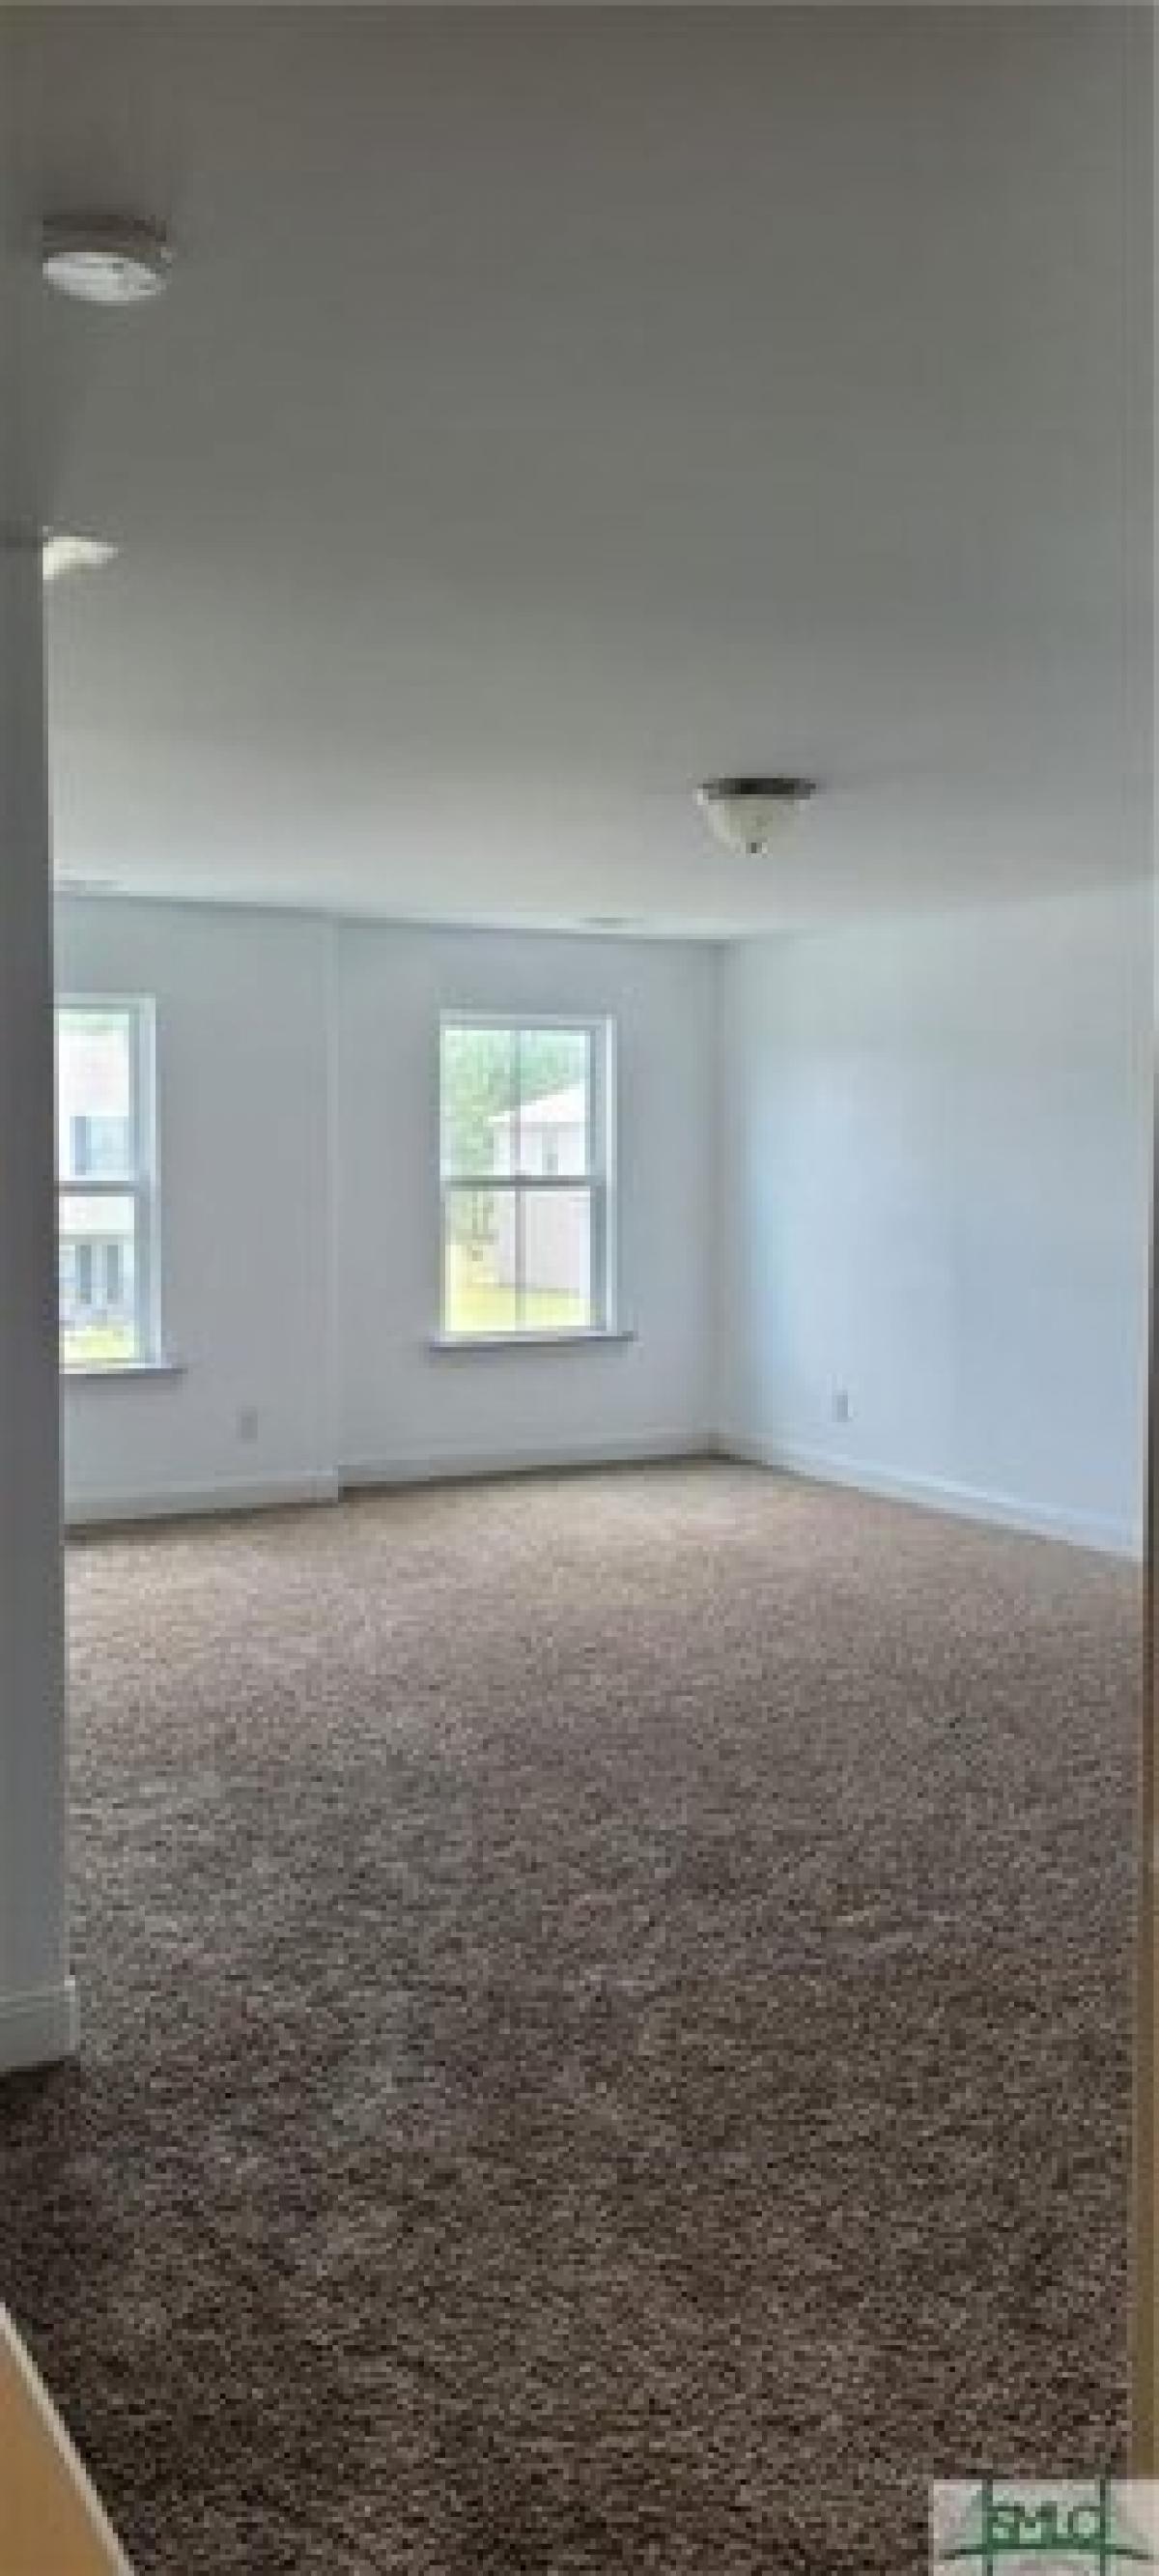 Picture of Home For Sale in Rincon, Georgia, United States